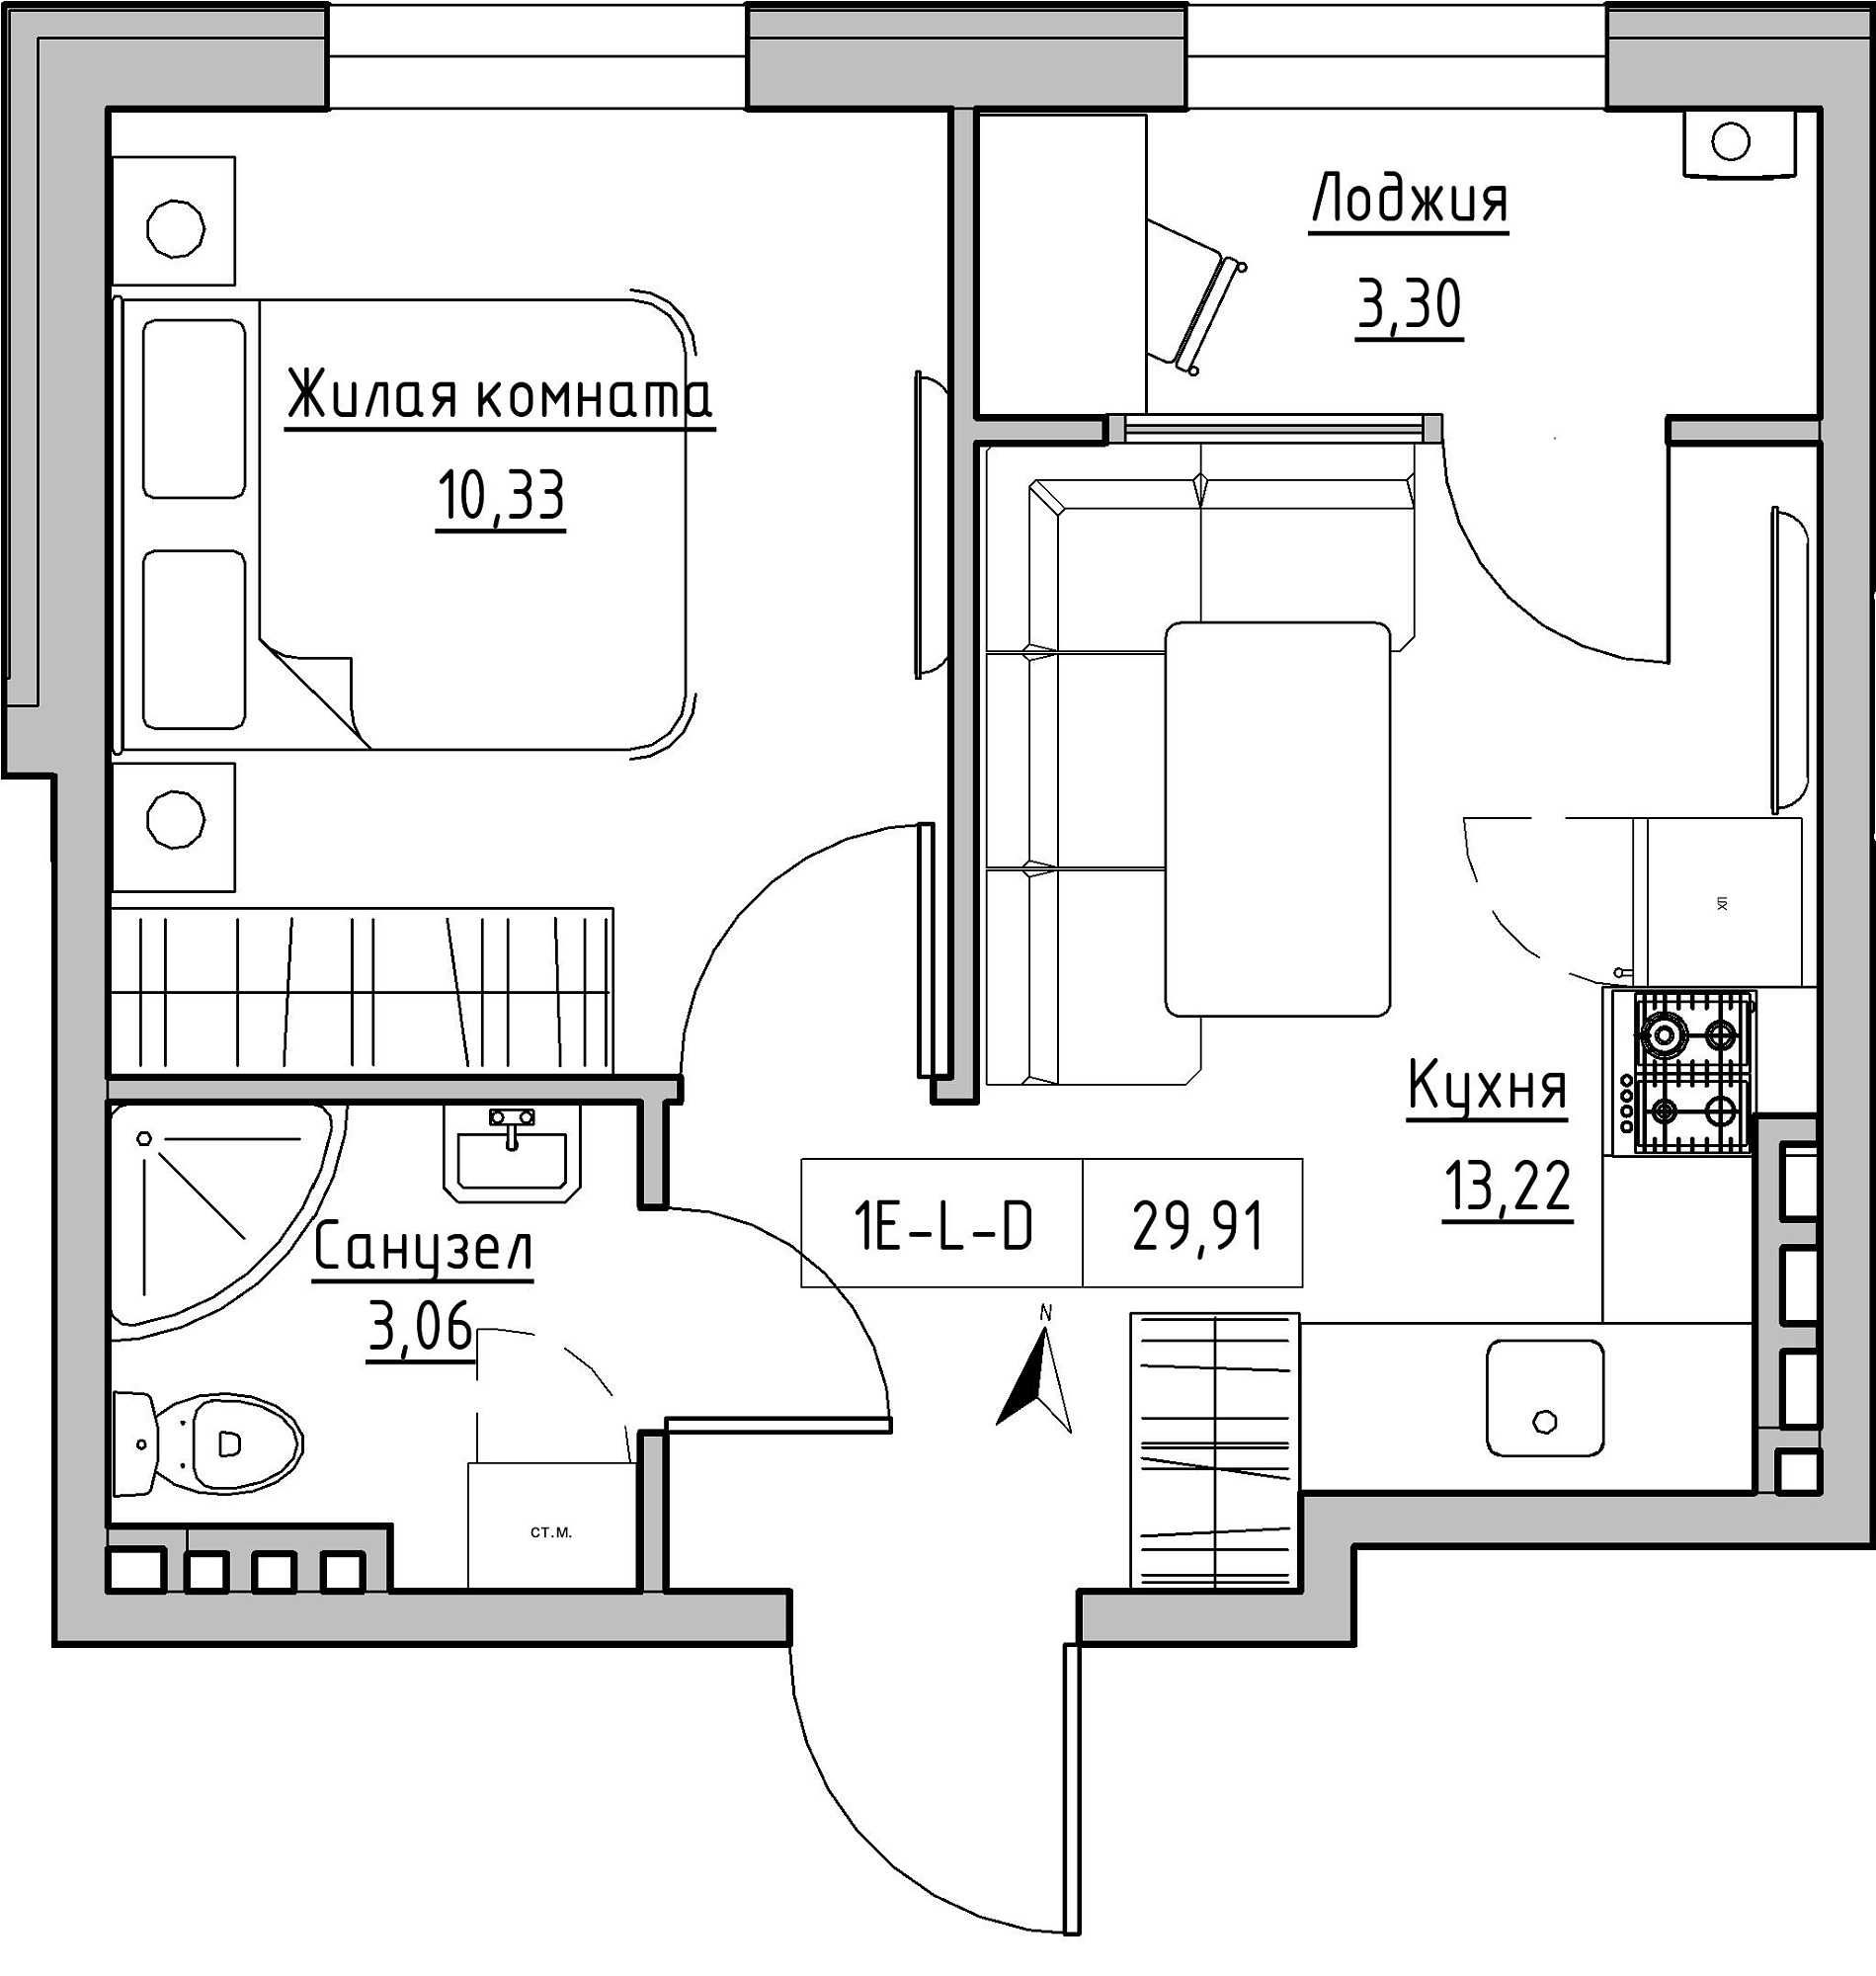 Planning 1-rm flats area 29.91m2, KS-024-03/0001.